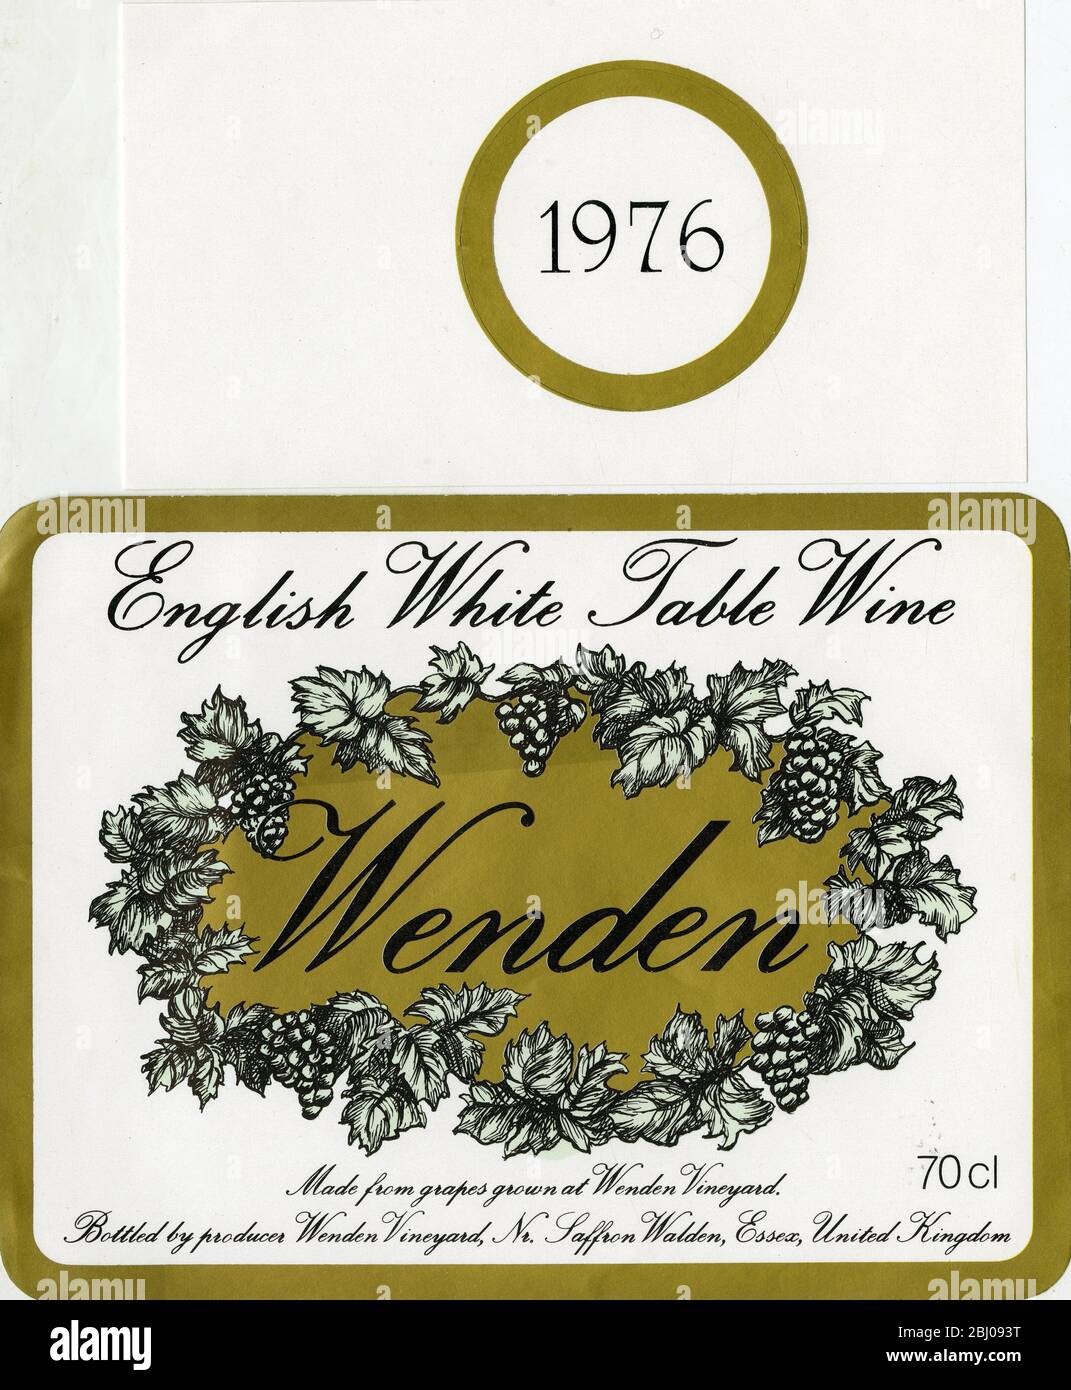 Wine Label - Wenden English White Table Wine. Made from grapes grown at Wenden Vineyard, Saffron Walden, Essex. Stock Photo